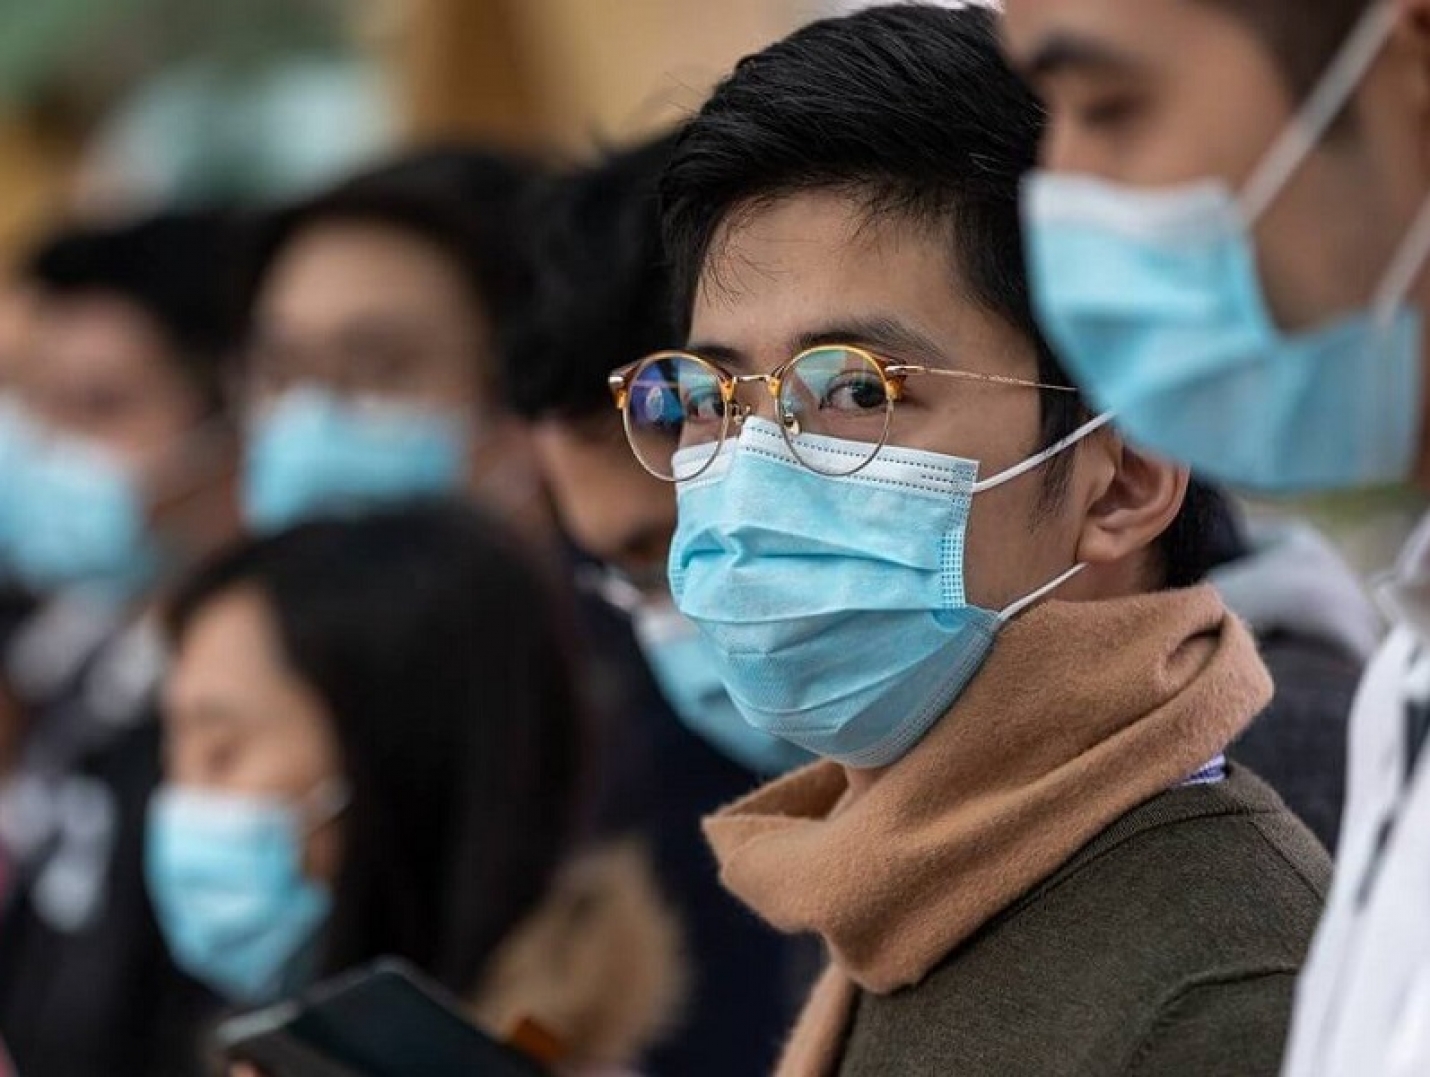 Китай объявил об остановке эпидемии коронавируса в стране